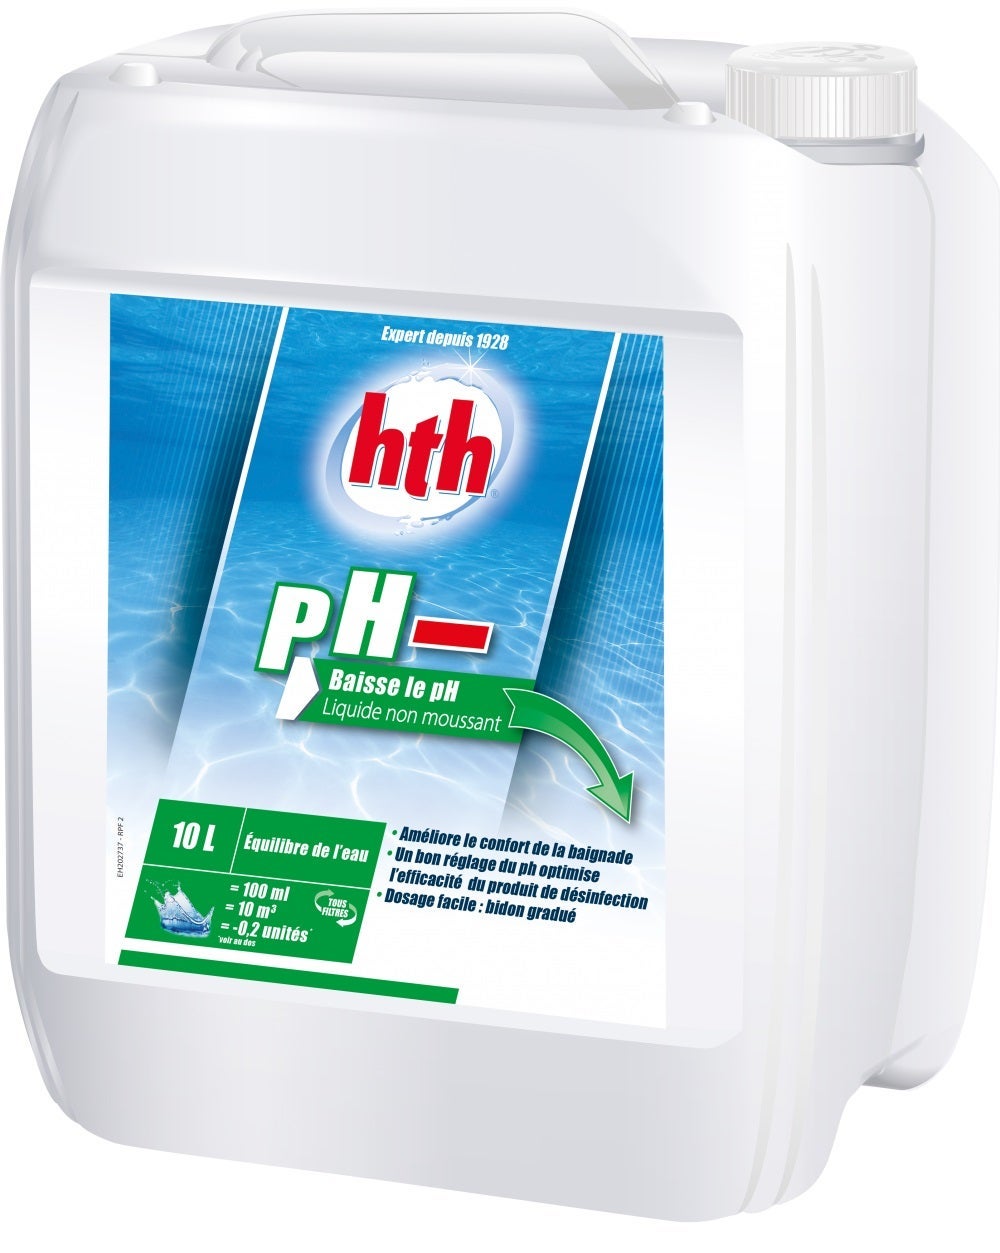 Régulateur de pH moins /Down Terra Aquatica 1 litre